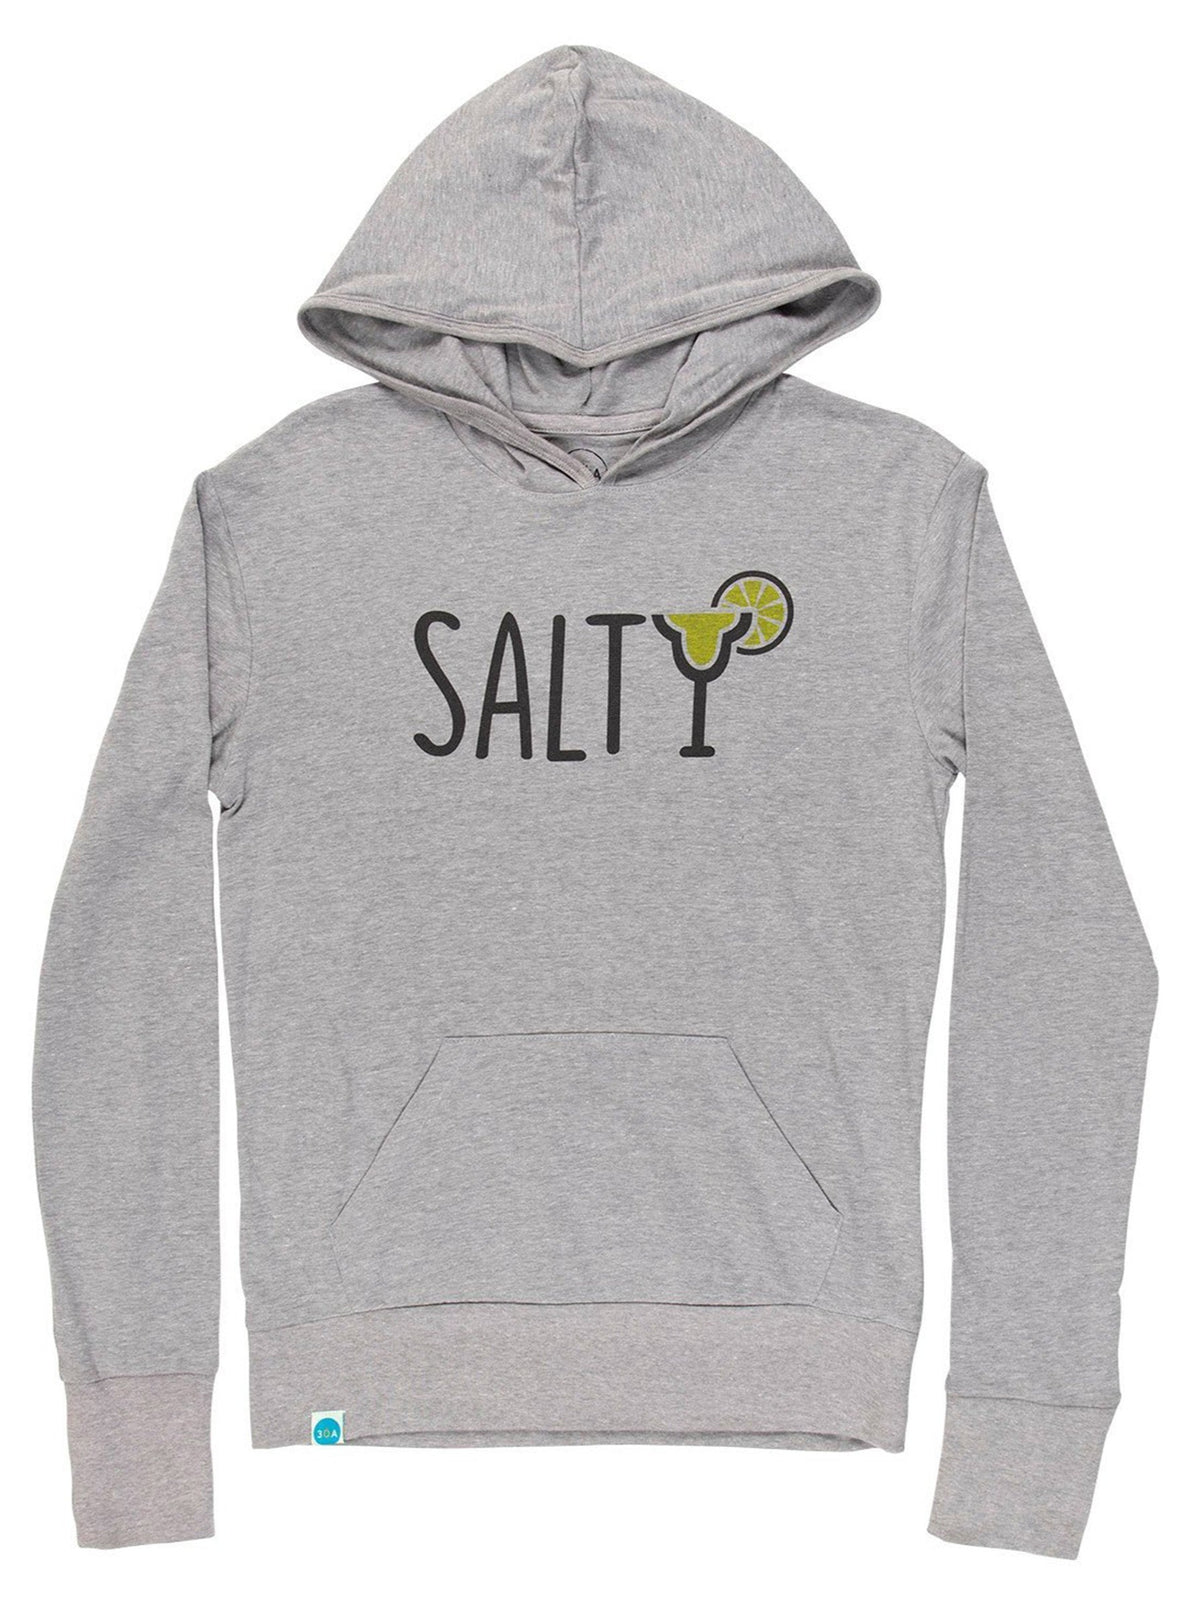 Salty Hooded Sweatshirt